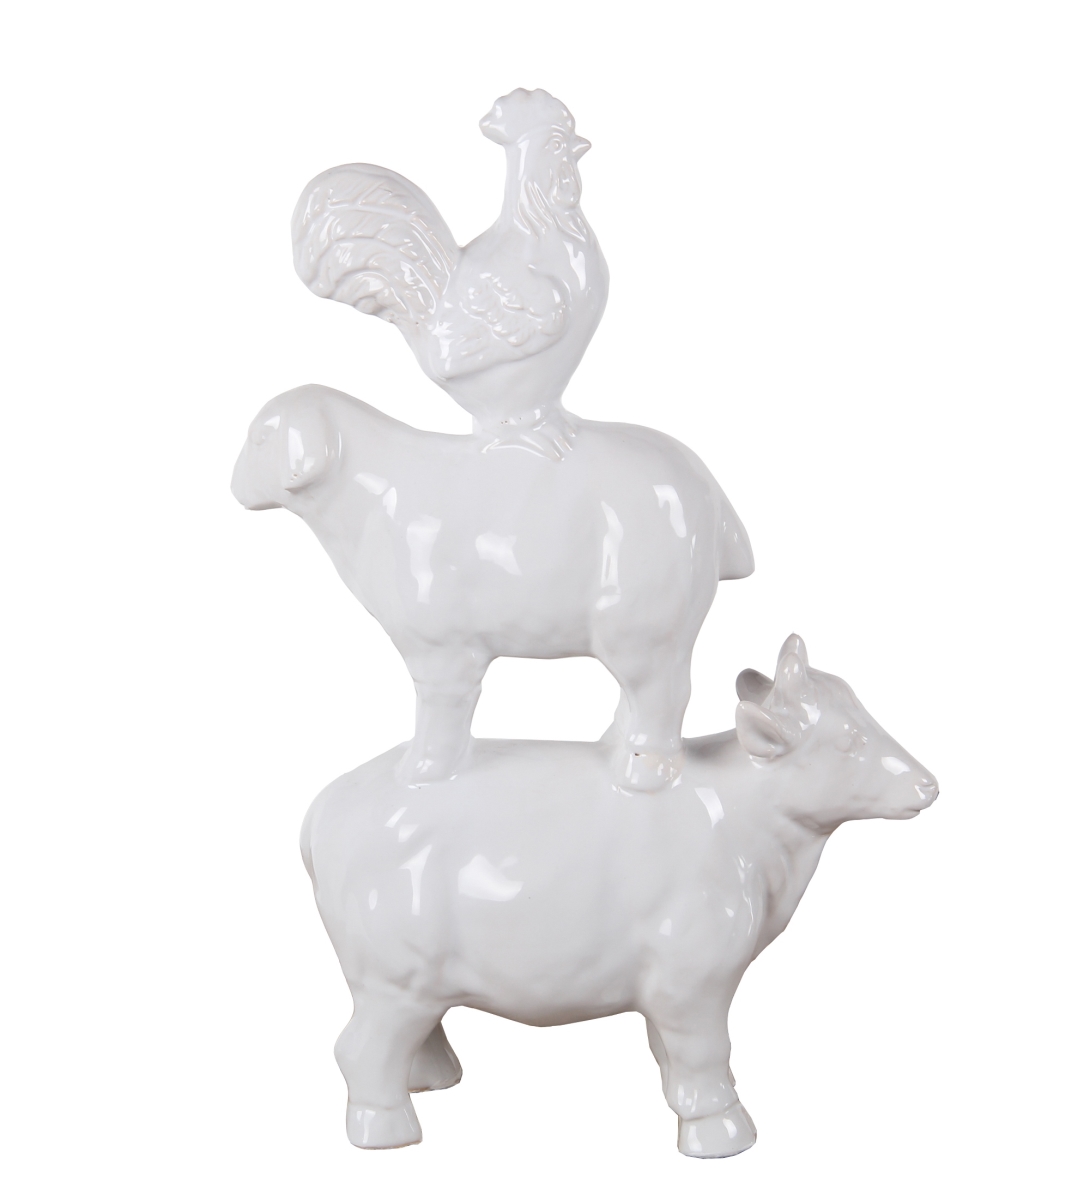 20311 9.5 X 3.5 X 14.5 In. Traditional Ceramic Animals Statue, White